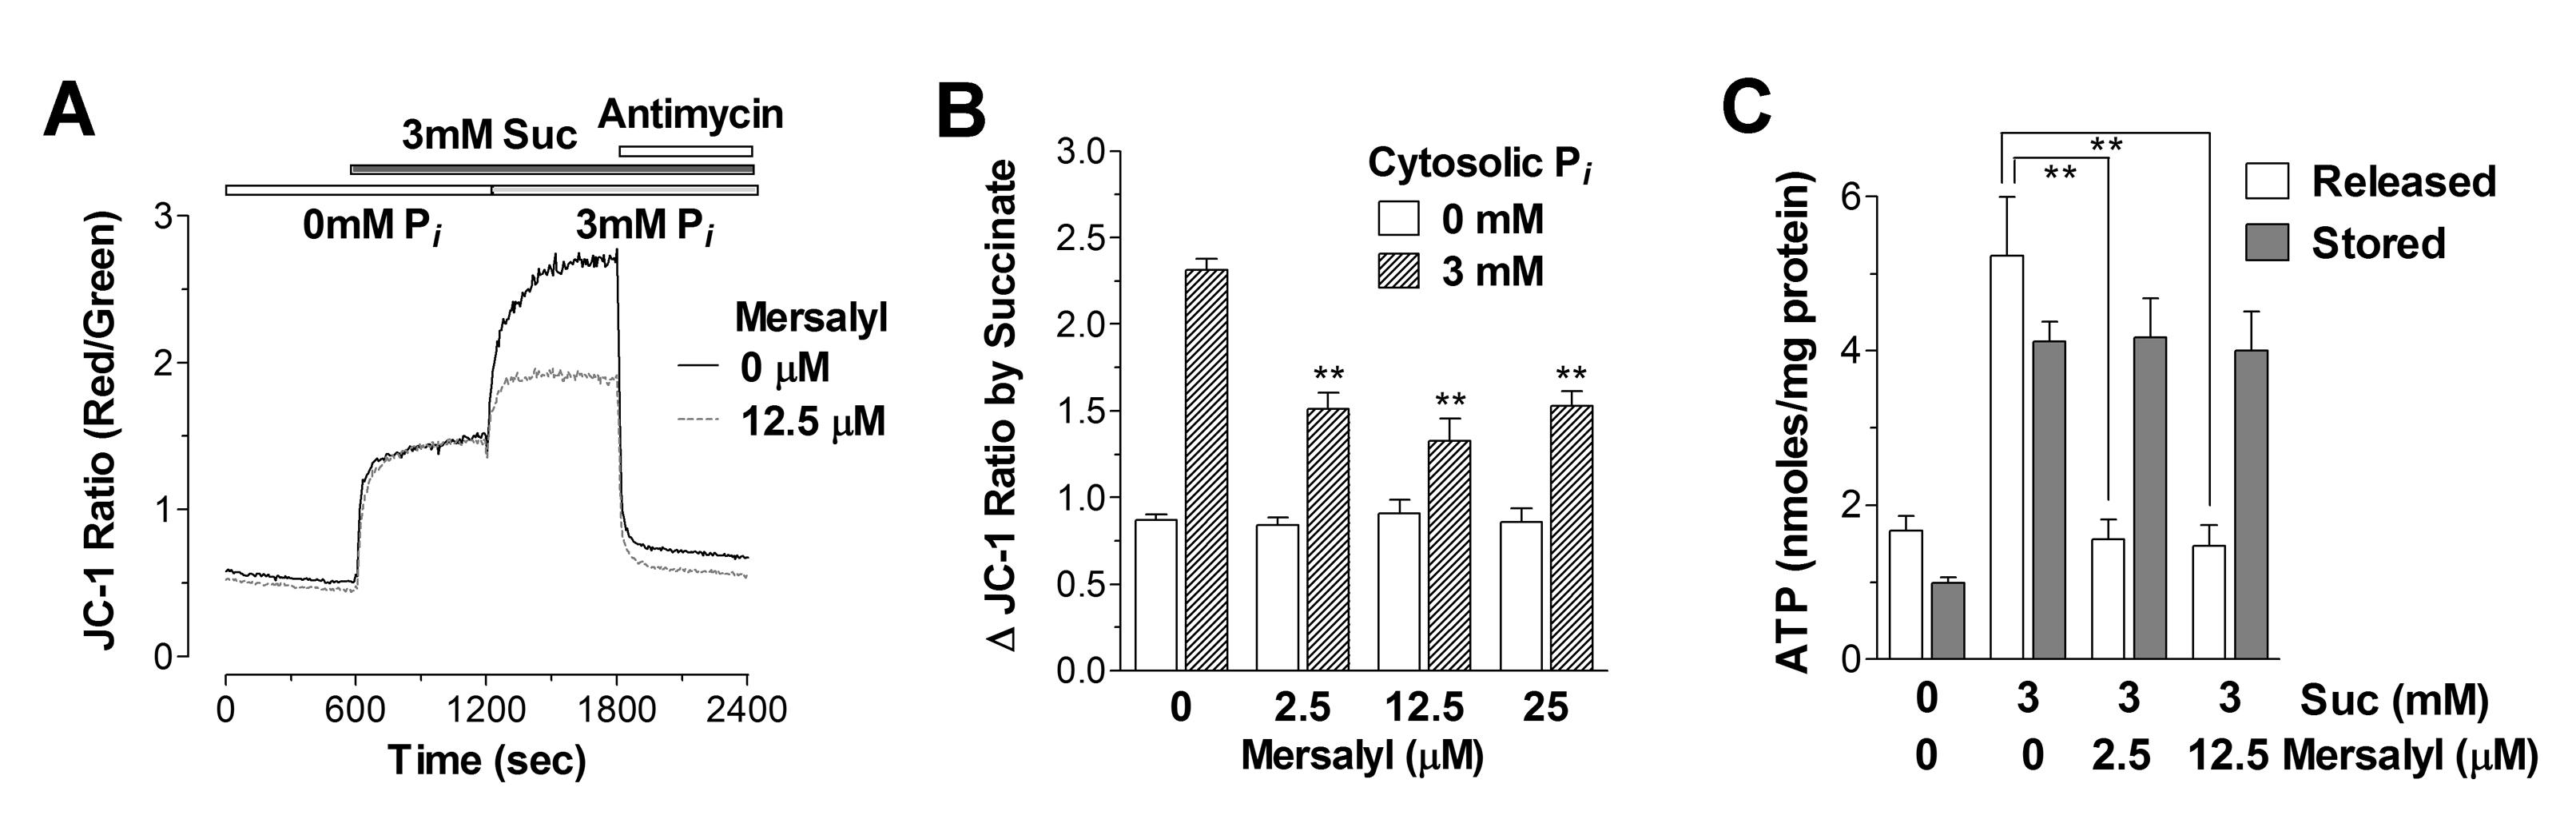 Pi-induced mitochondrial activation에 대한 mersalyl의 차단효과